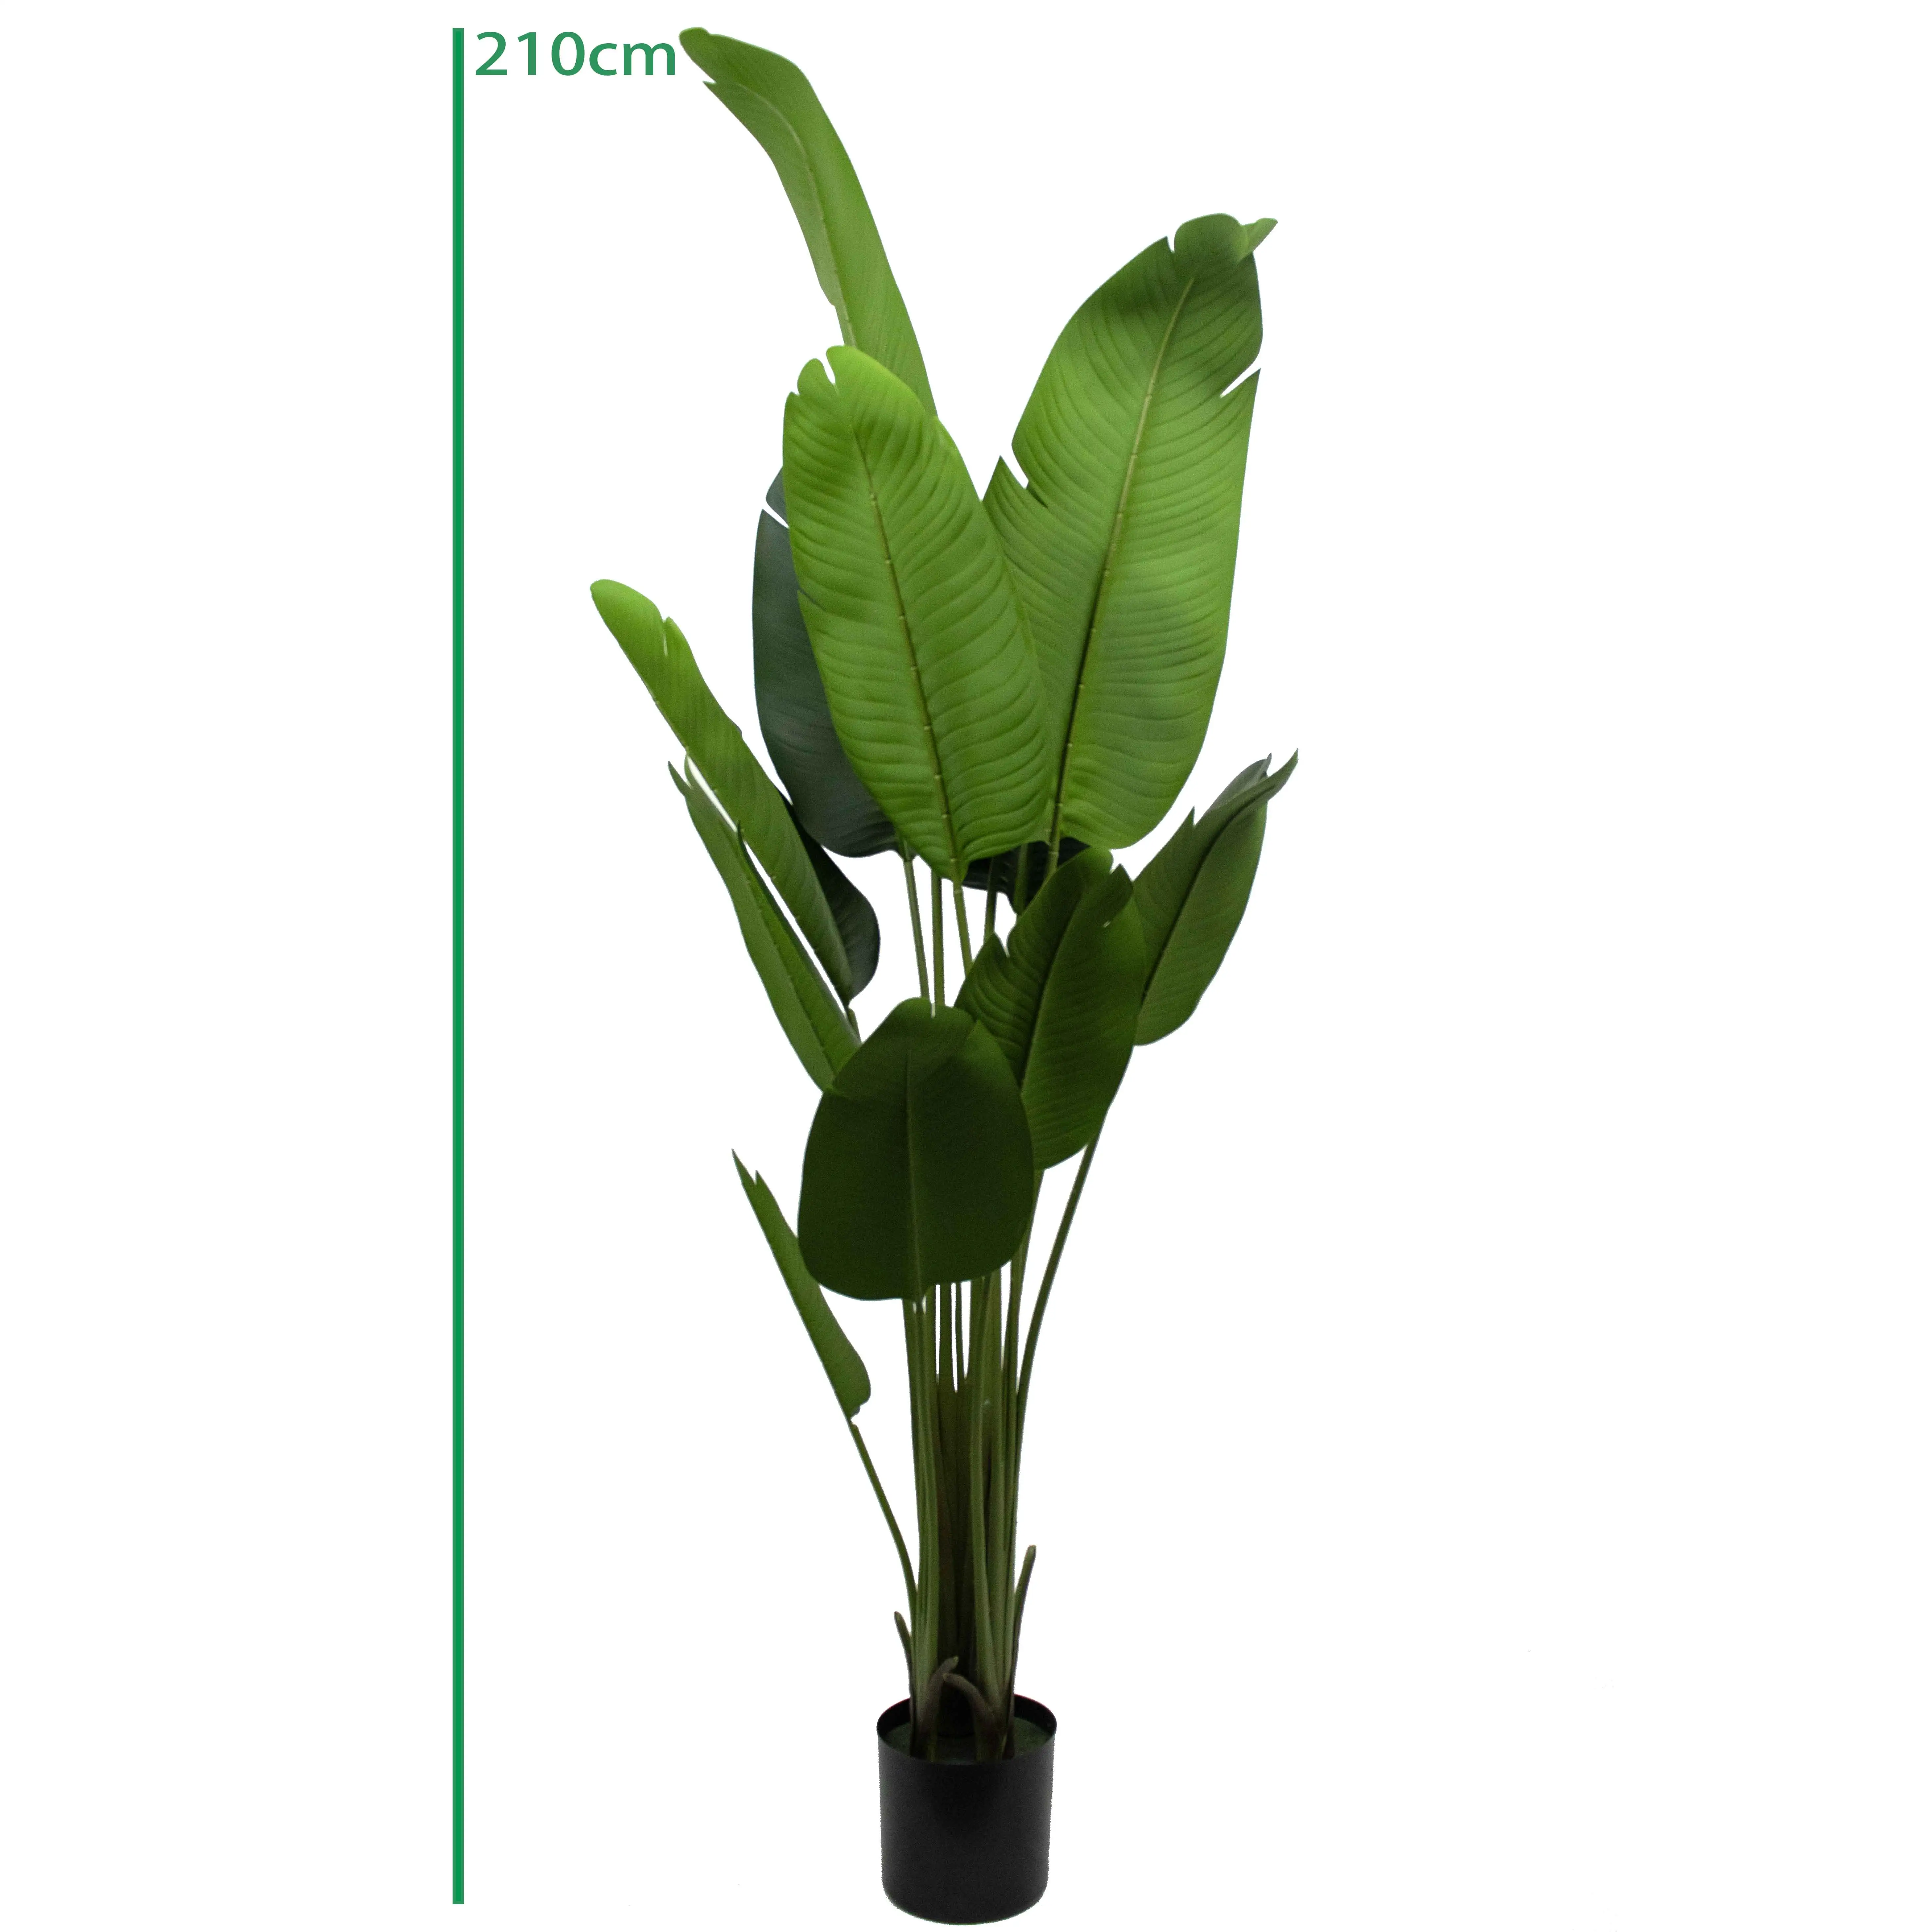 210cm plastik simulasi 13 daun tanaman hias taman tumbuhan buatan realistis pohon pisang basjoo strelitzia